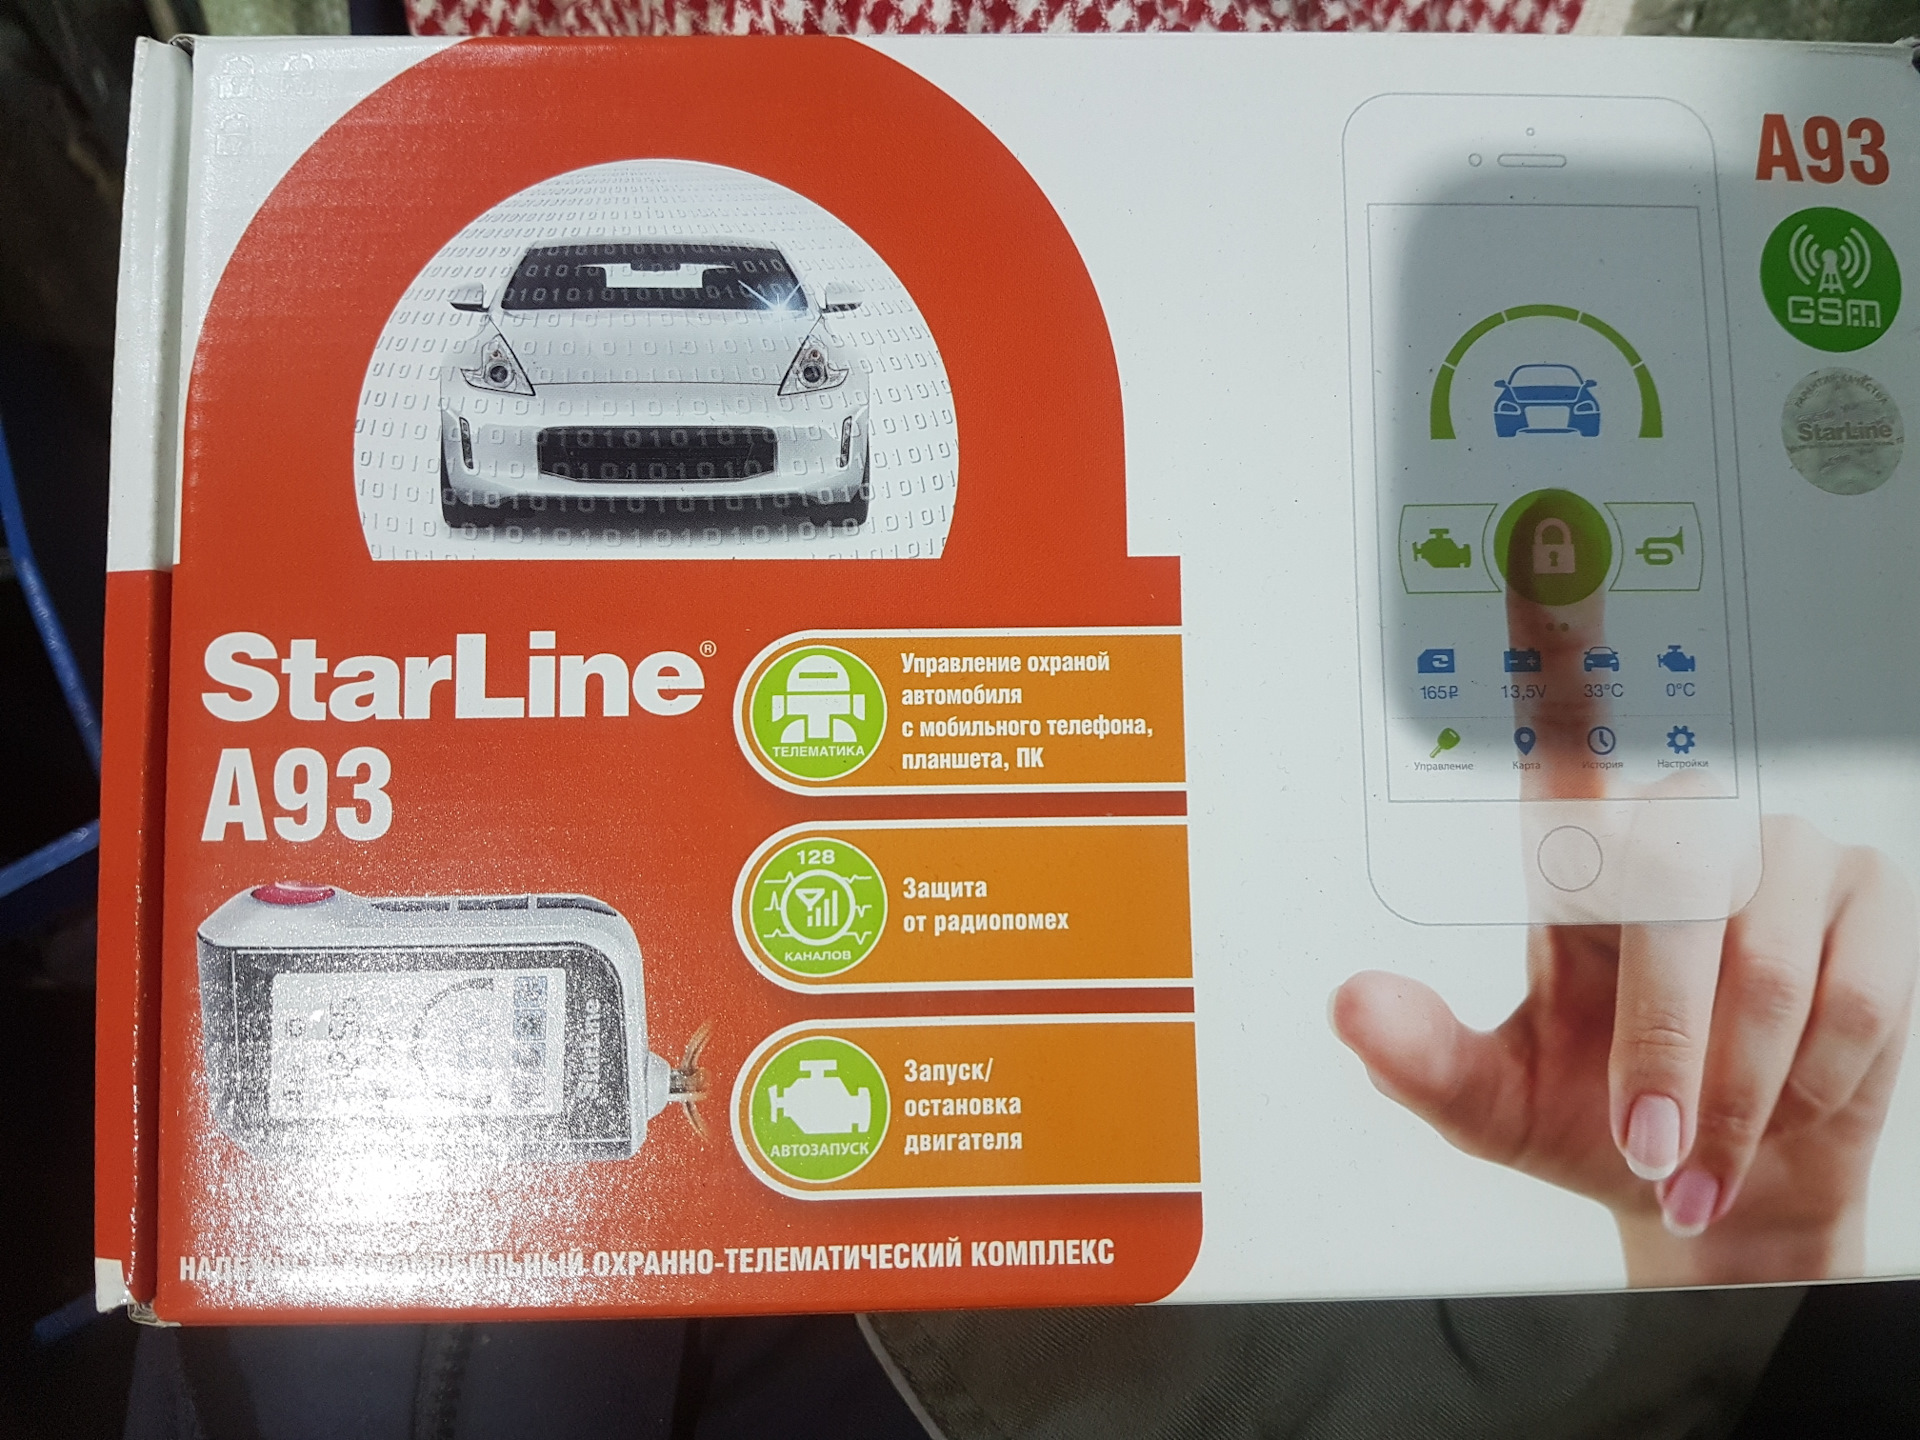 STARLINE a93 GSM. Старлайн управление с телефона. Как установить старлайн на телефон